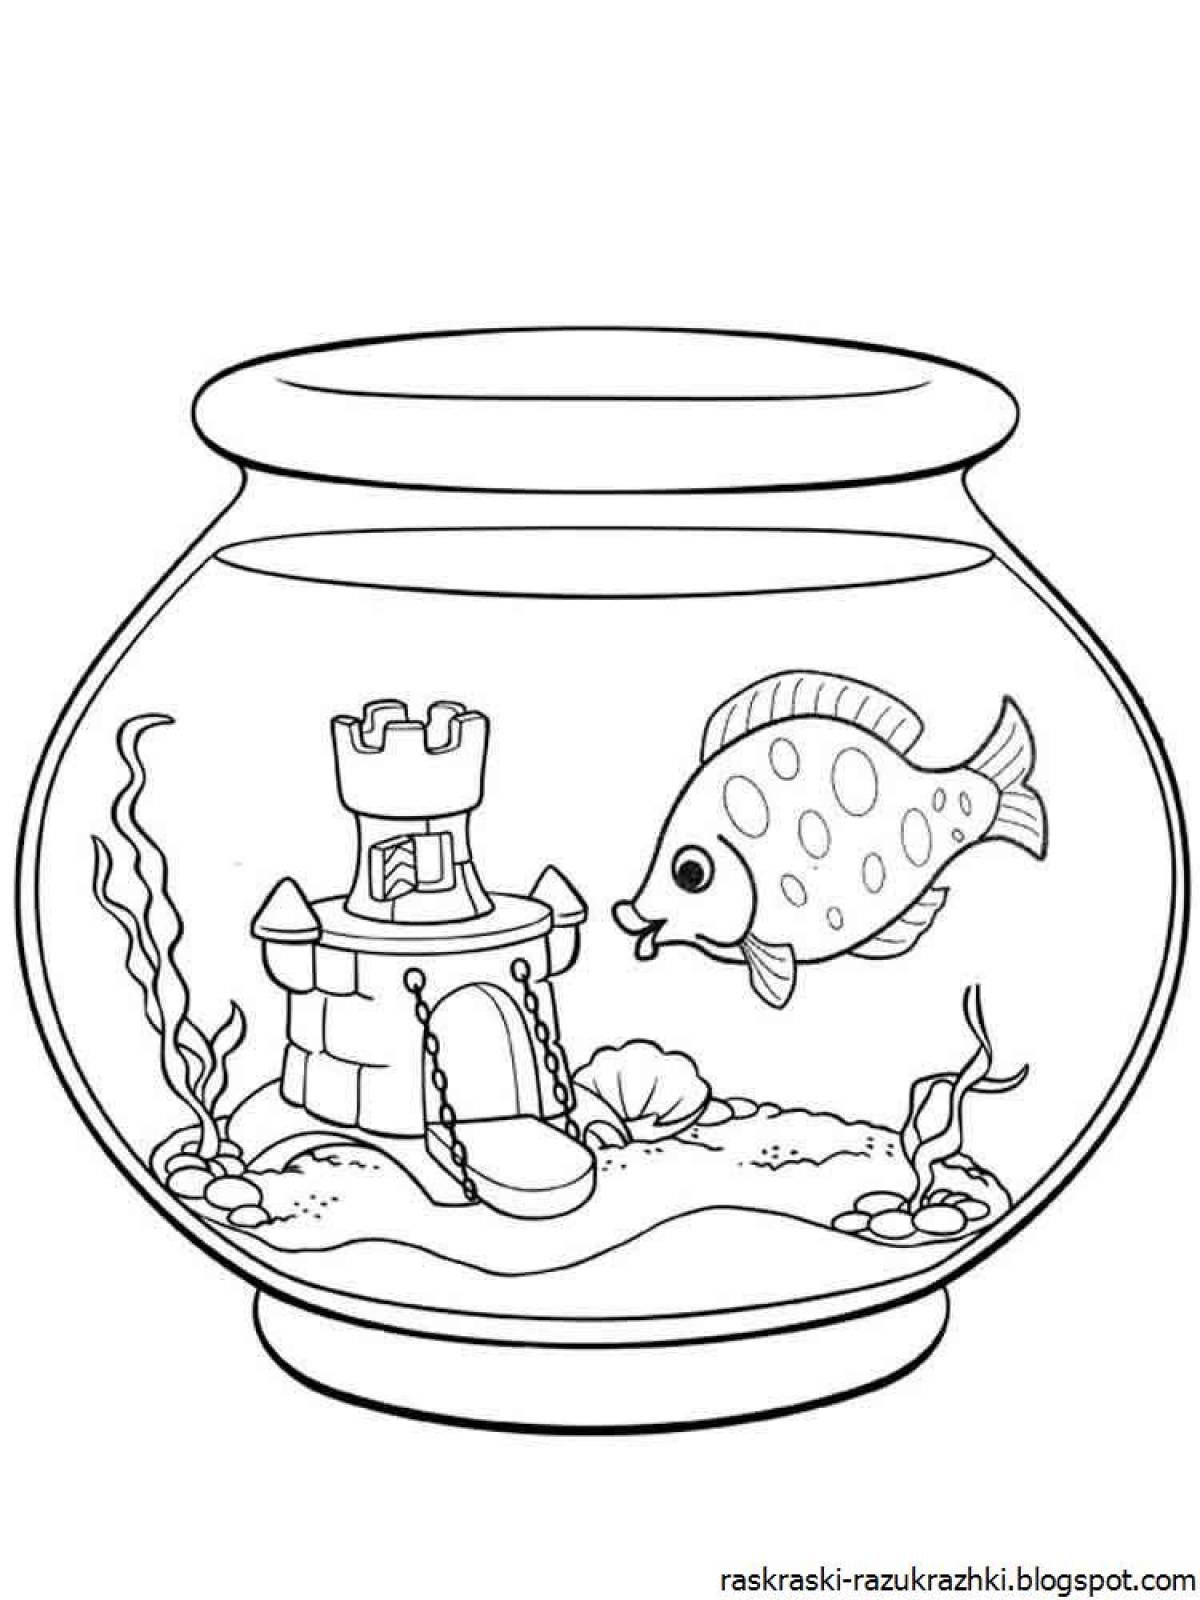 Fish tank #2